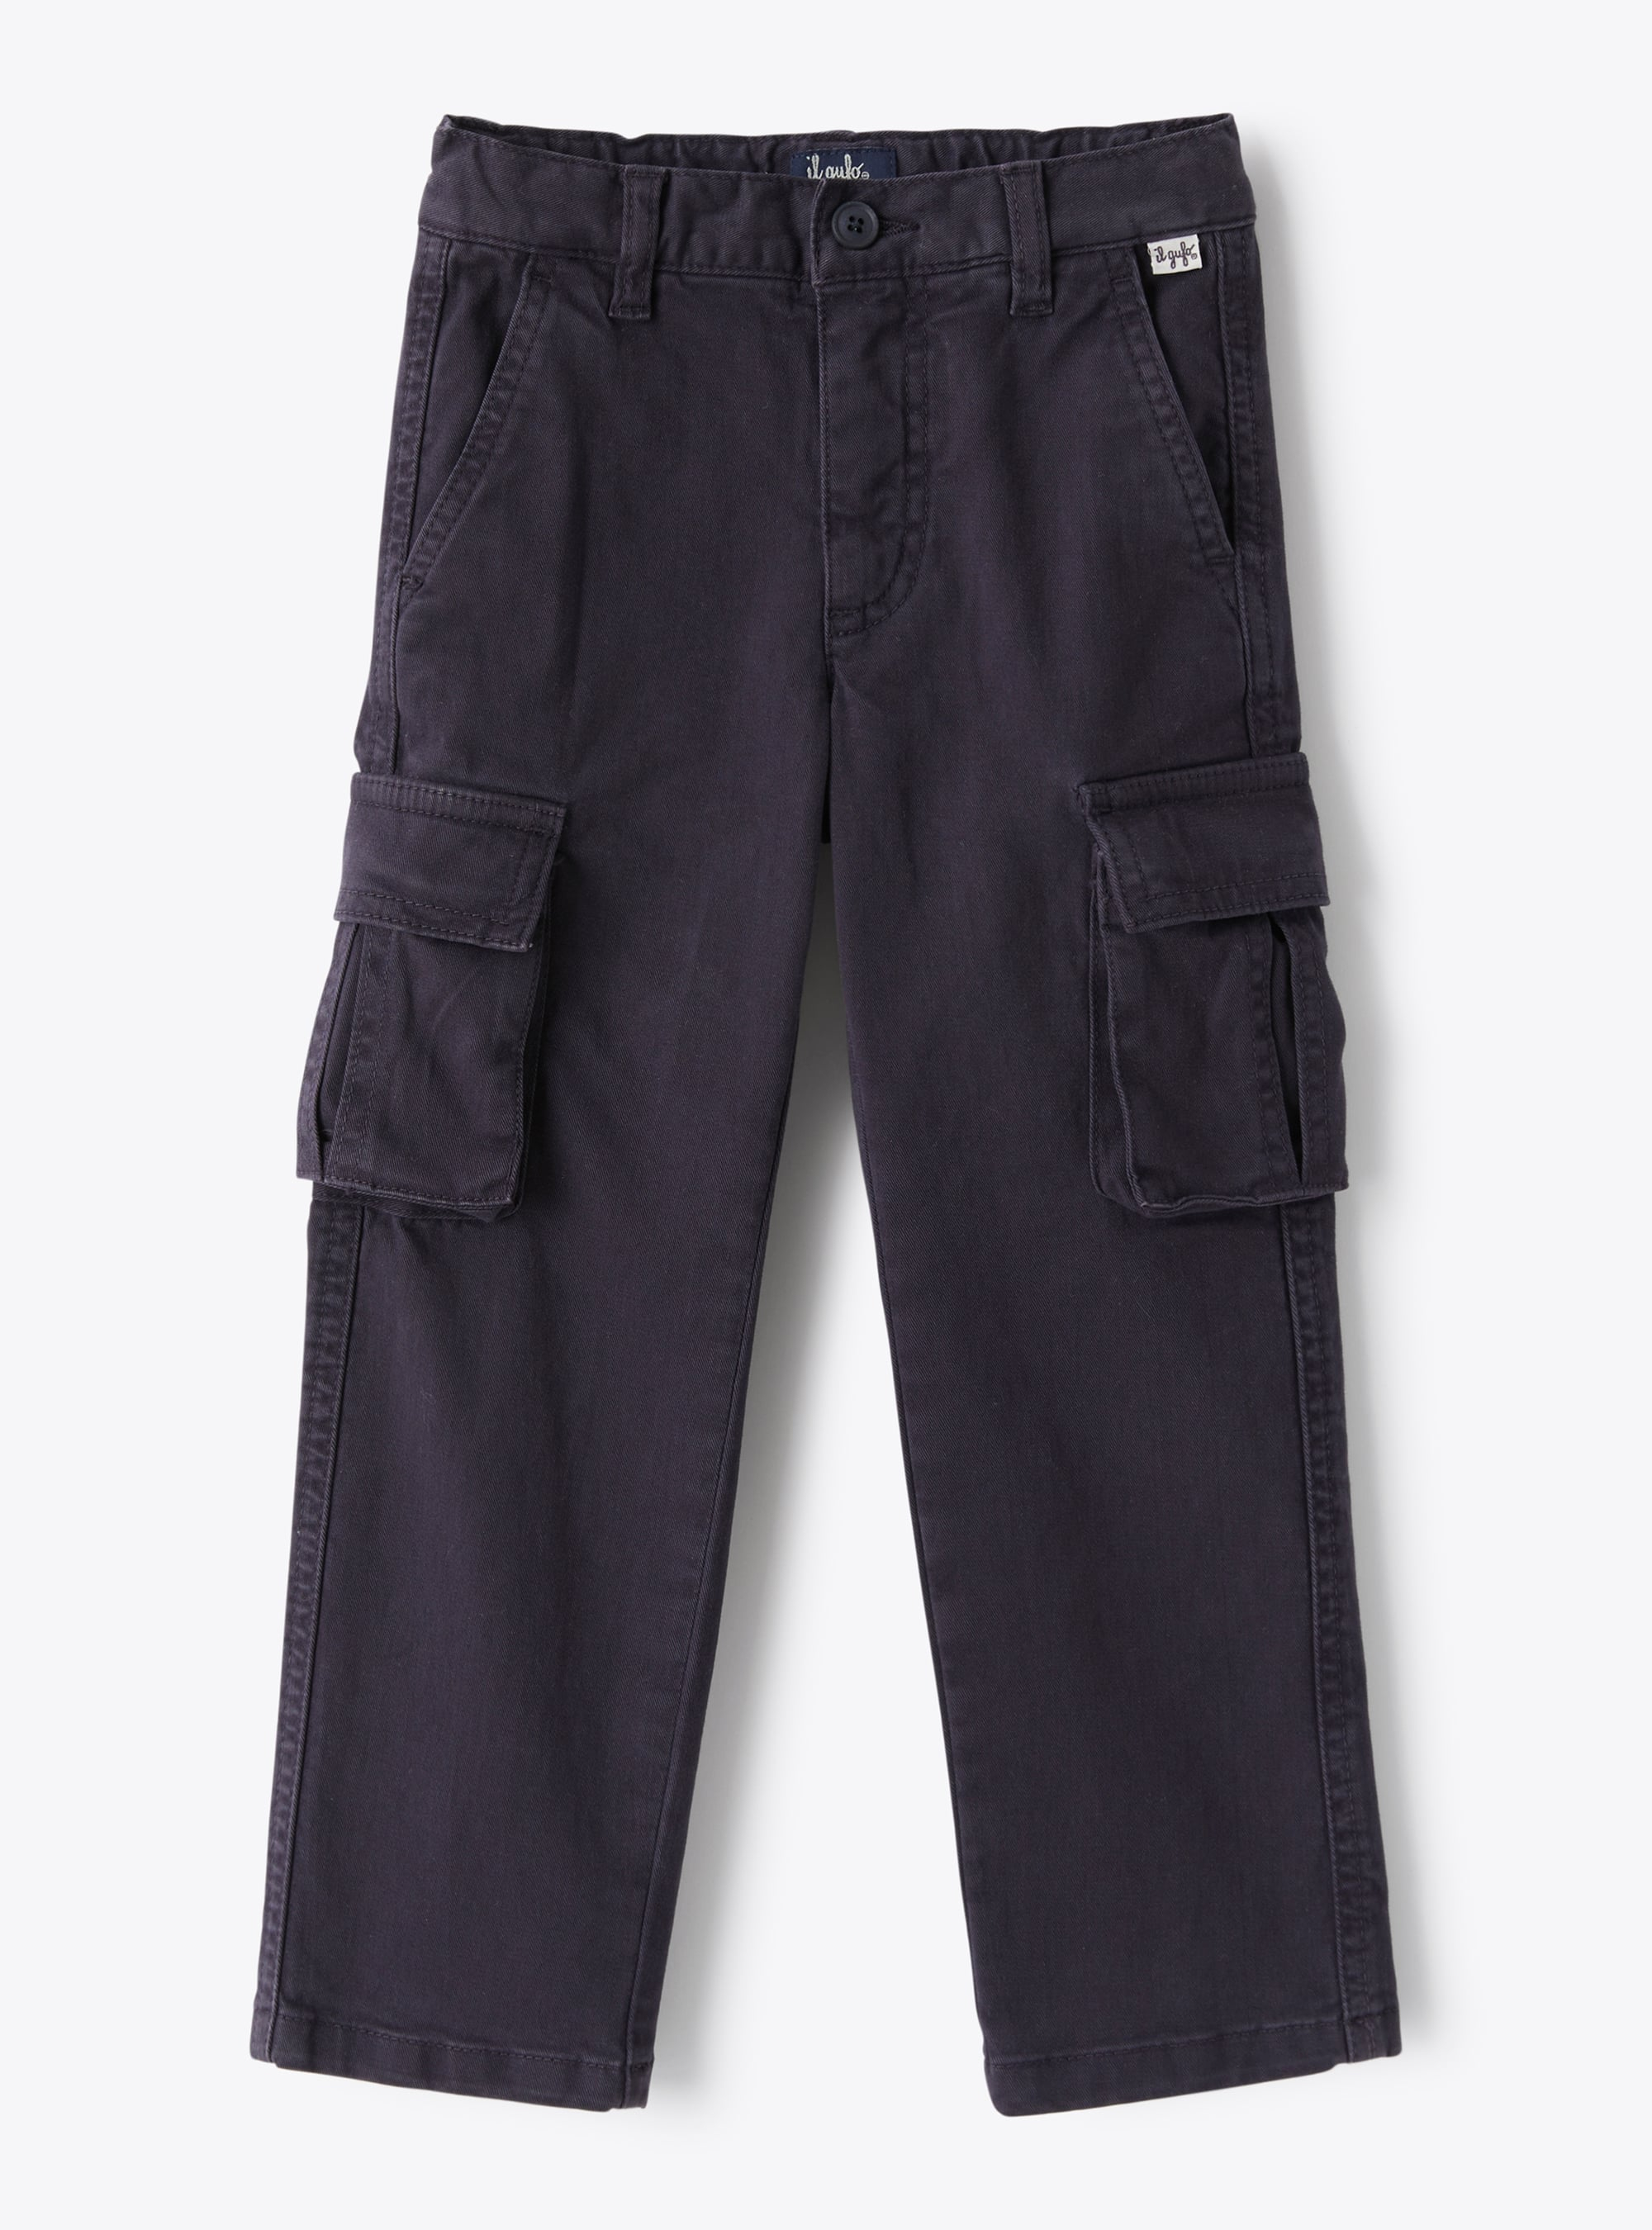 Cargo pants in stretch blue gabardine - Trousers - Il Gufo